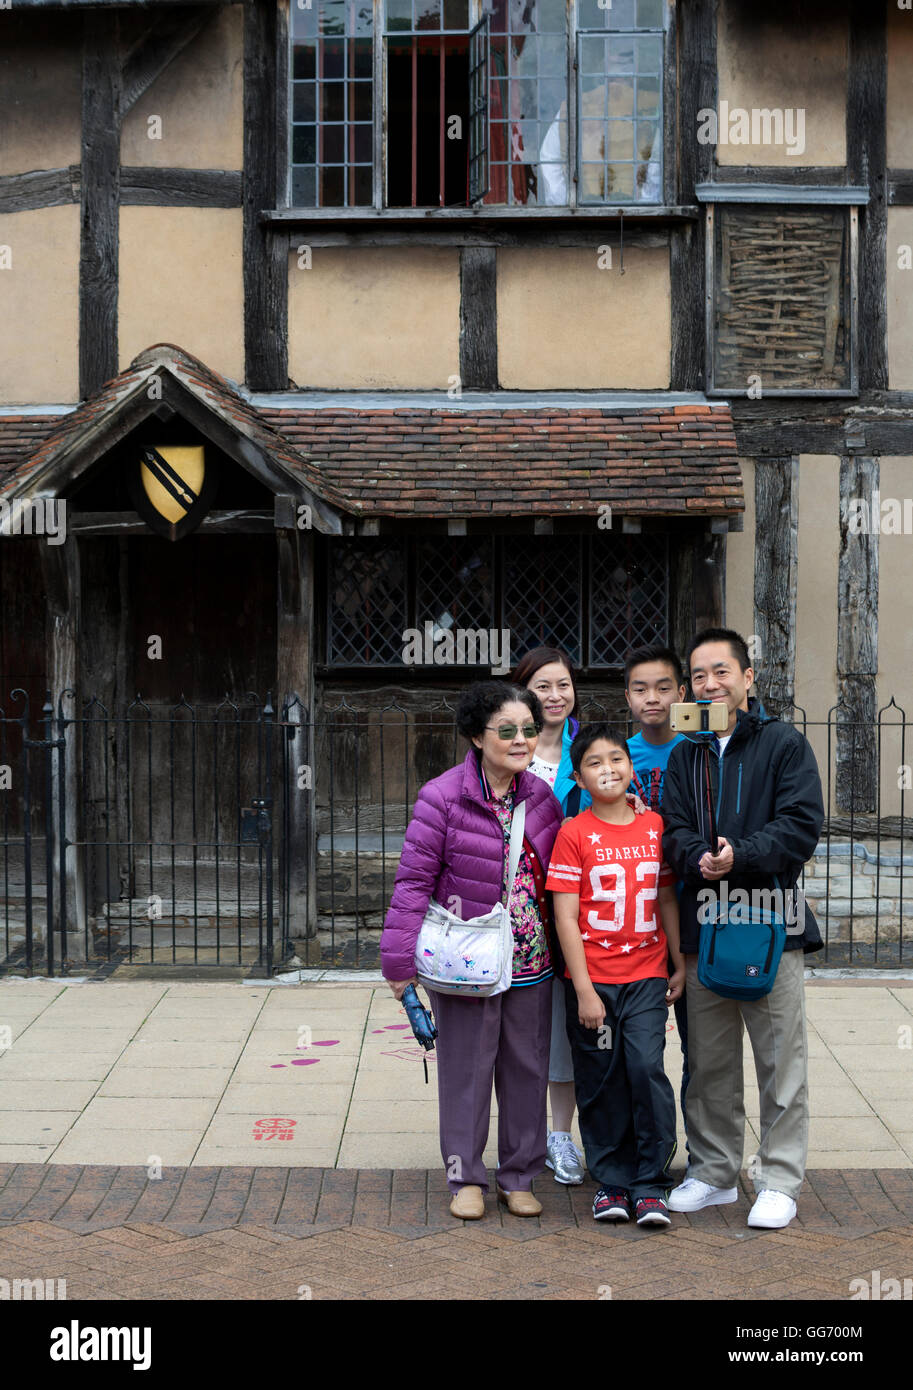 Chinese tourists taking selfie photograph outside William Shakespeare`s Birthplace, Stratford-upon-Avon, Warwickshire, UK Stock Photo